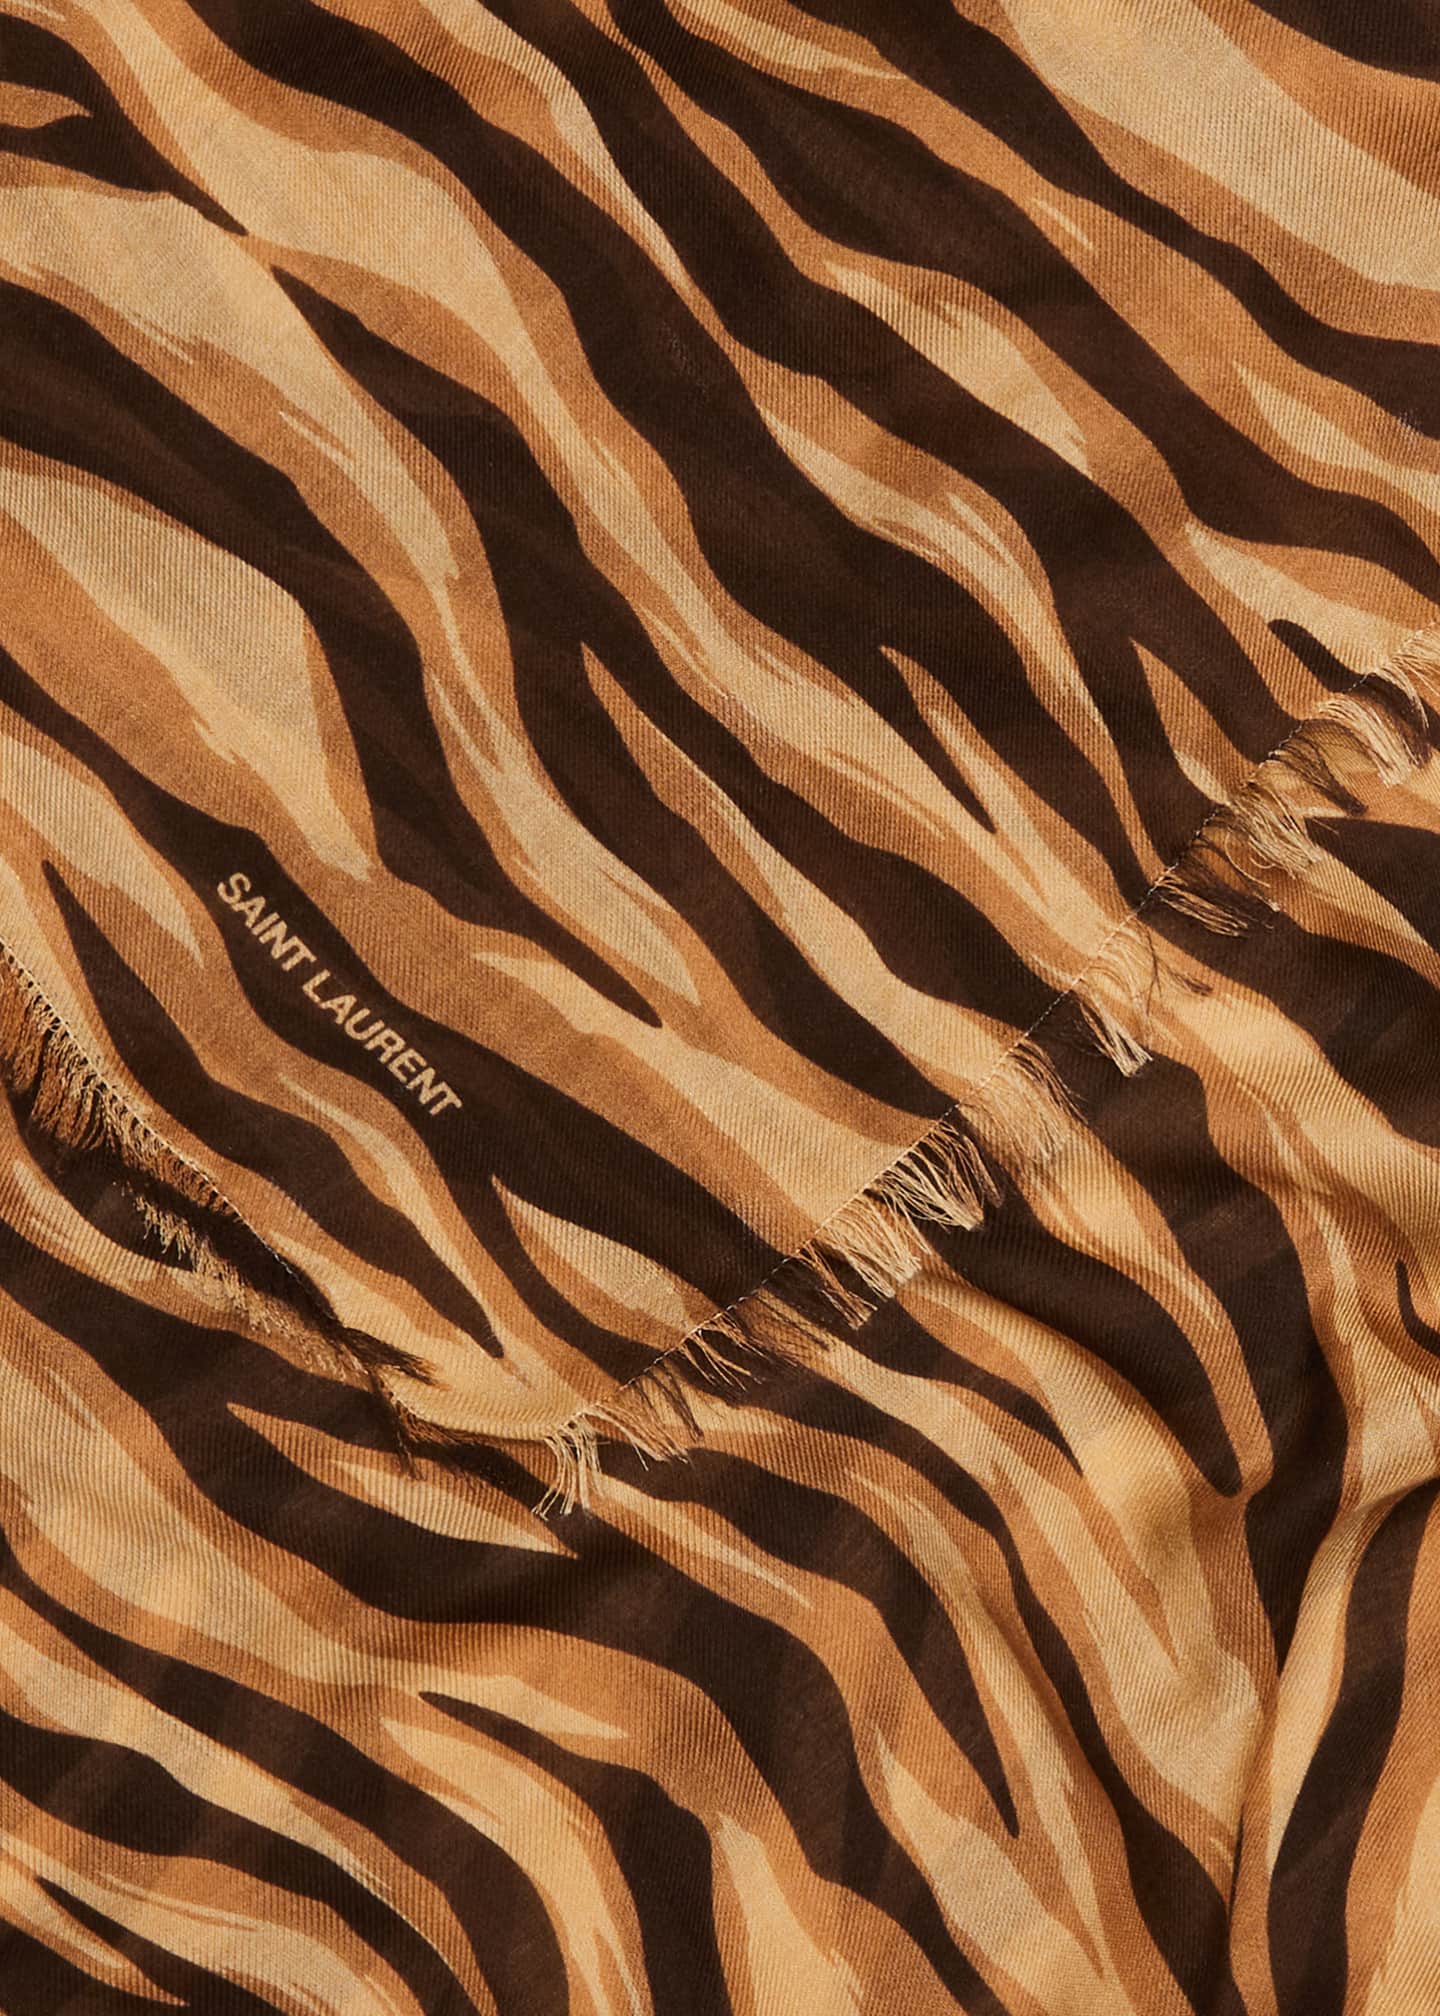 Saint Laurent Tiger Textured YSL Brooch - Bergdorf Goodman